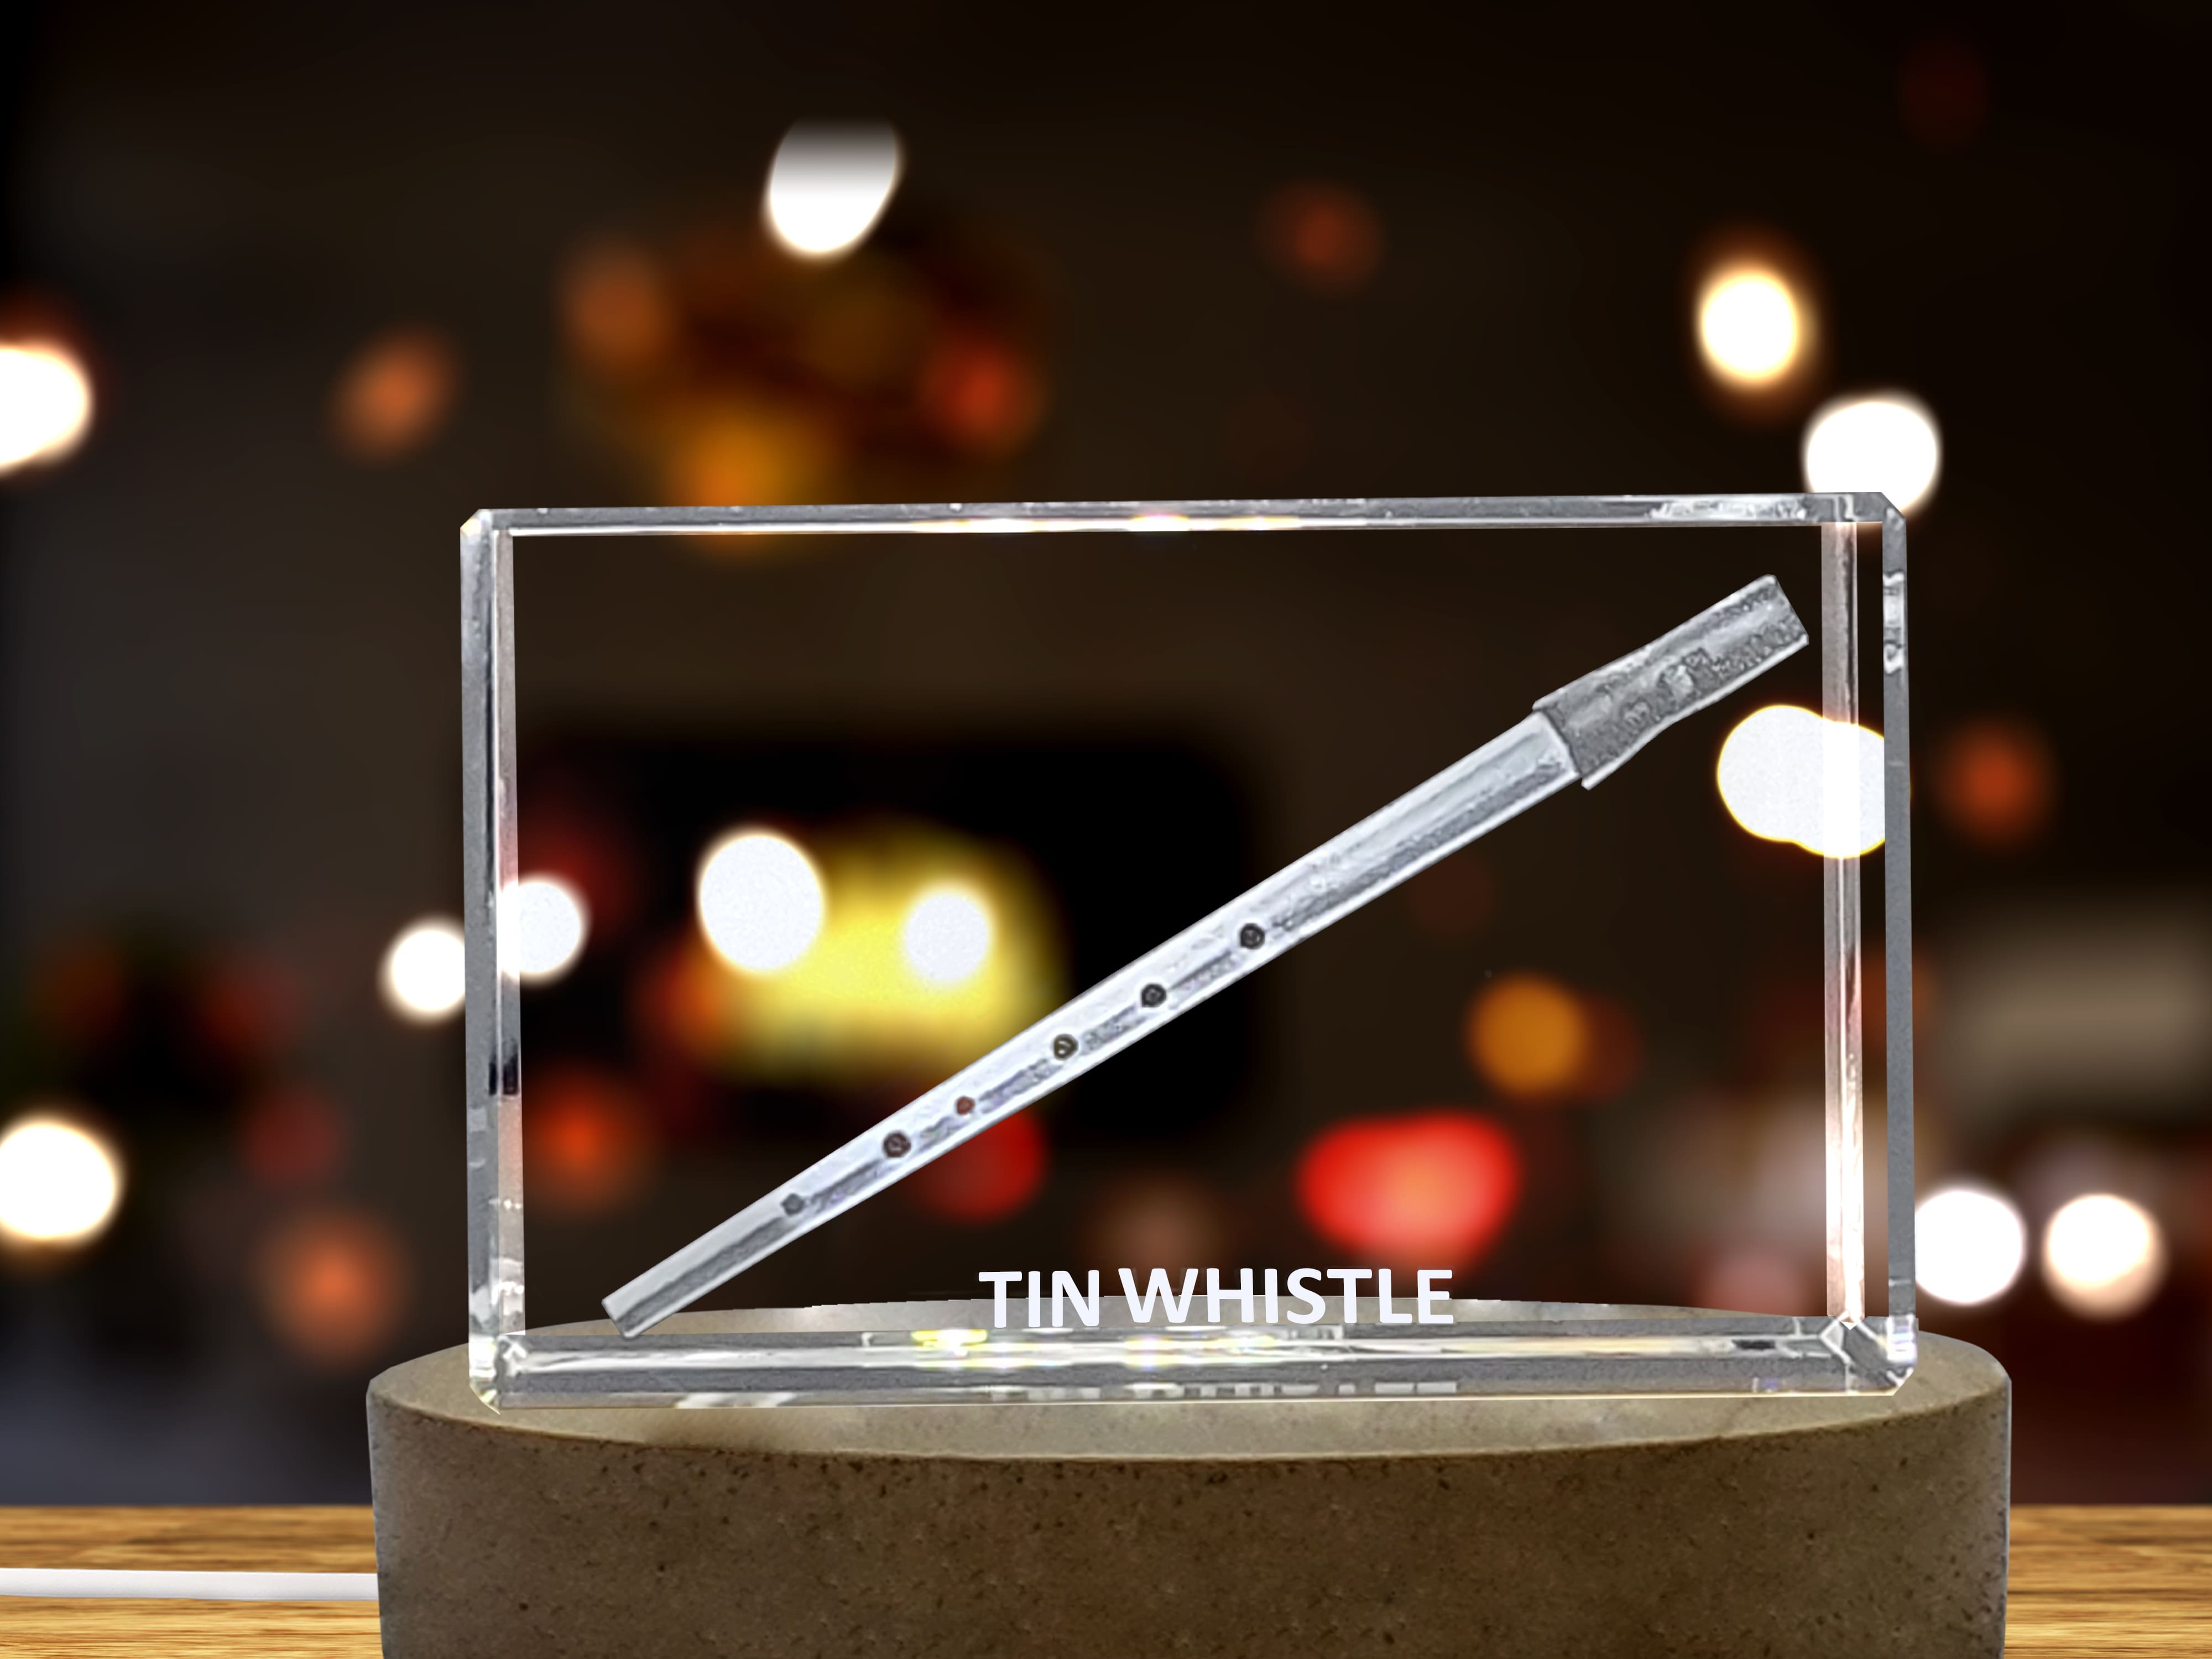 Tin Whistle 3D Engraved Crystal 3D Engraved Crystal Keepsake/Gift/Decor/Collectible/Souvenir A&B Crystal Collection